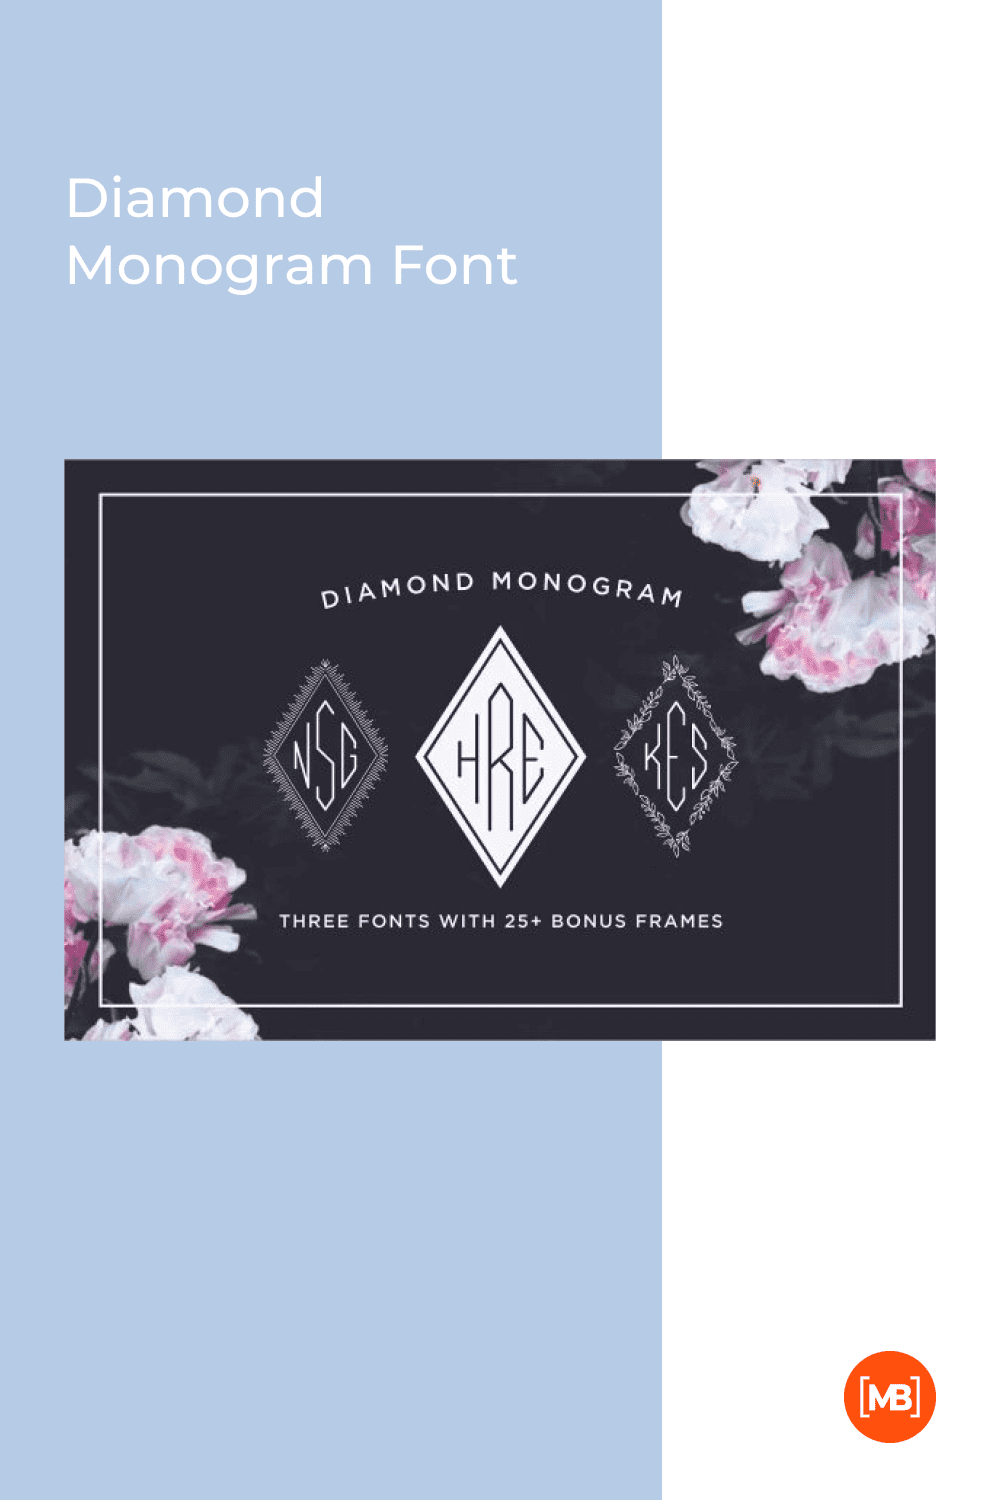 Diamond Monogram Font a trendy monogram set suitable for wedding invitations.